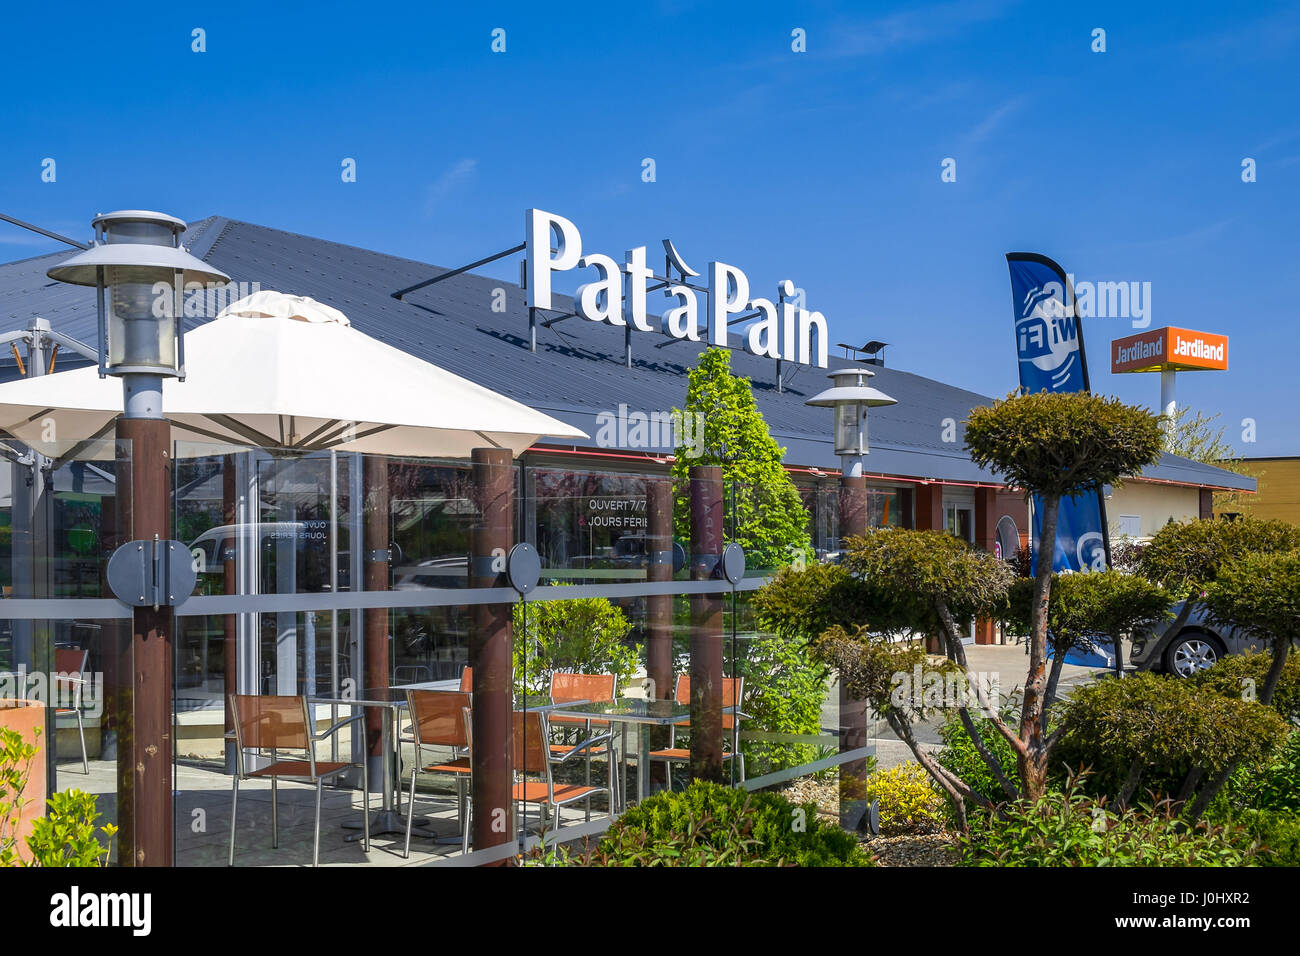 Pat à Pain" restaurant sign, Chatellerault, France Stock Photo - Alamy